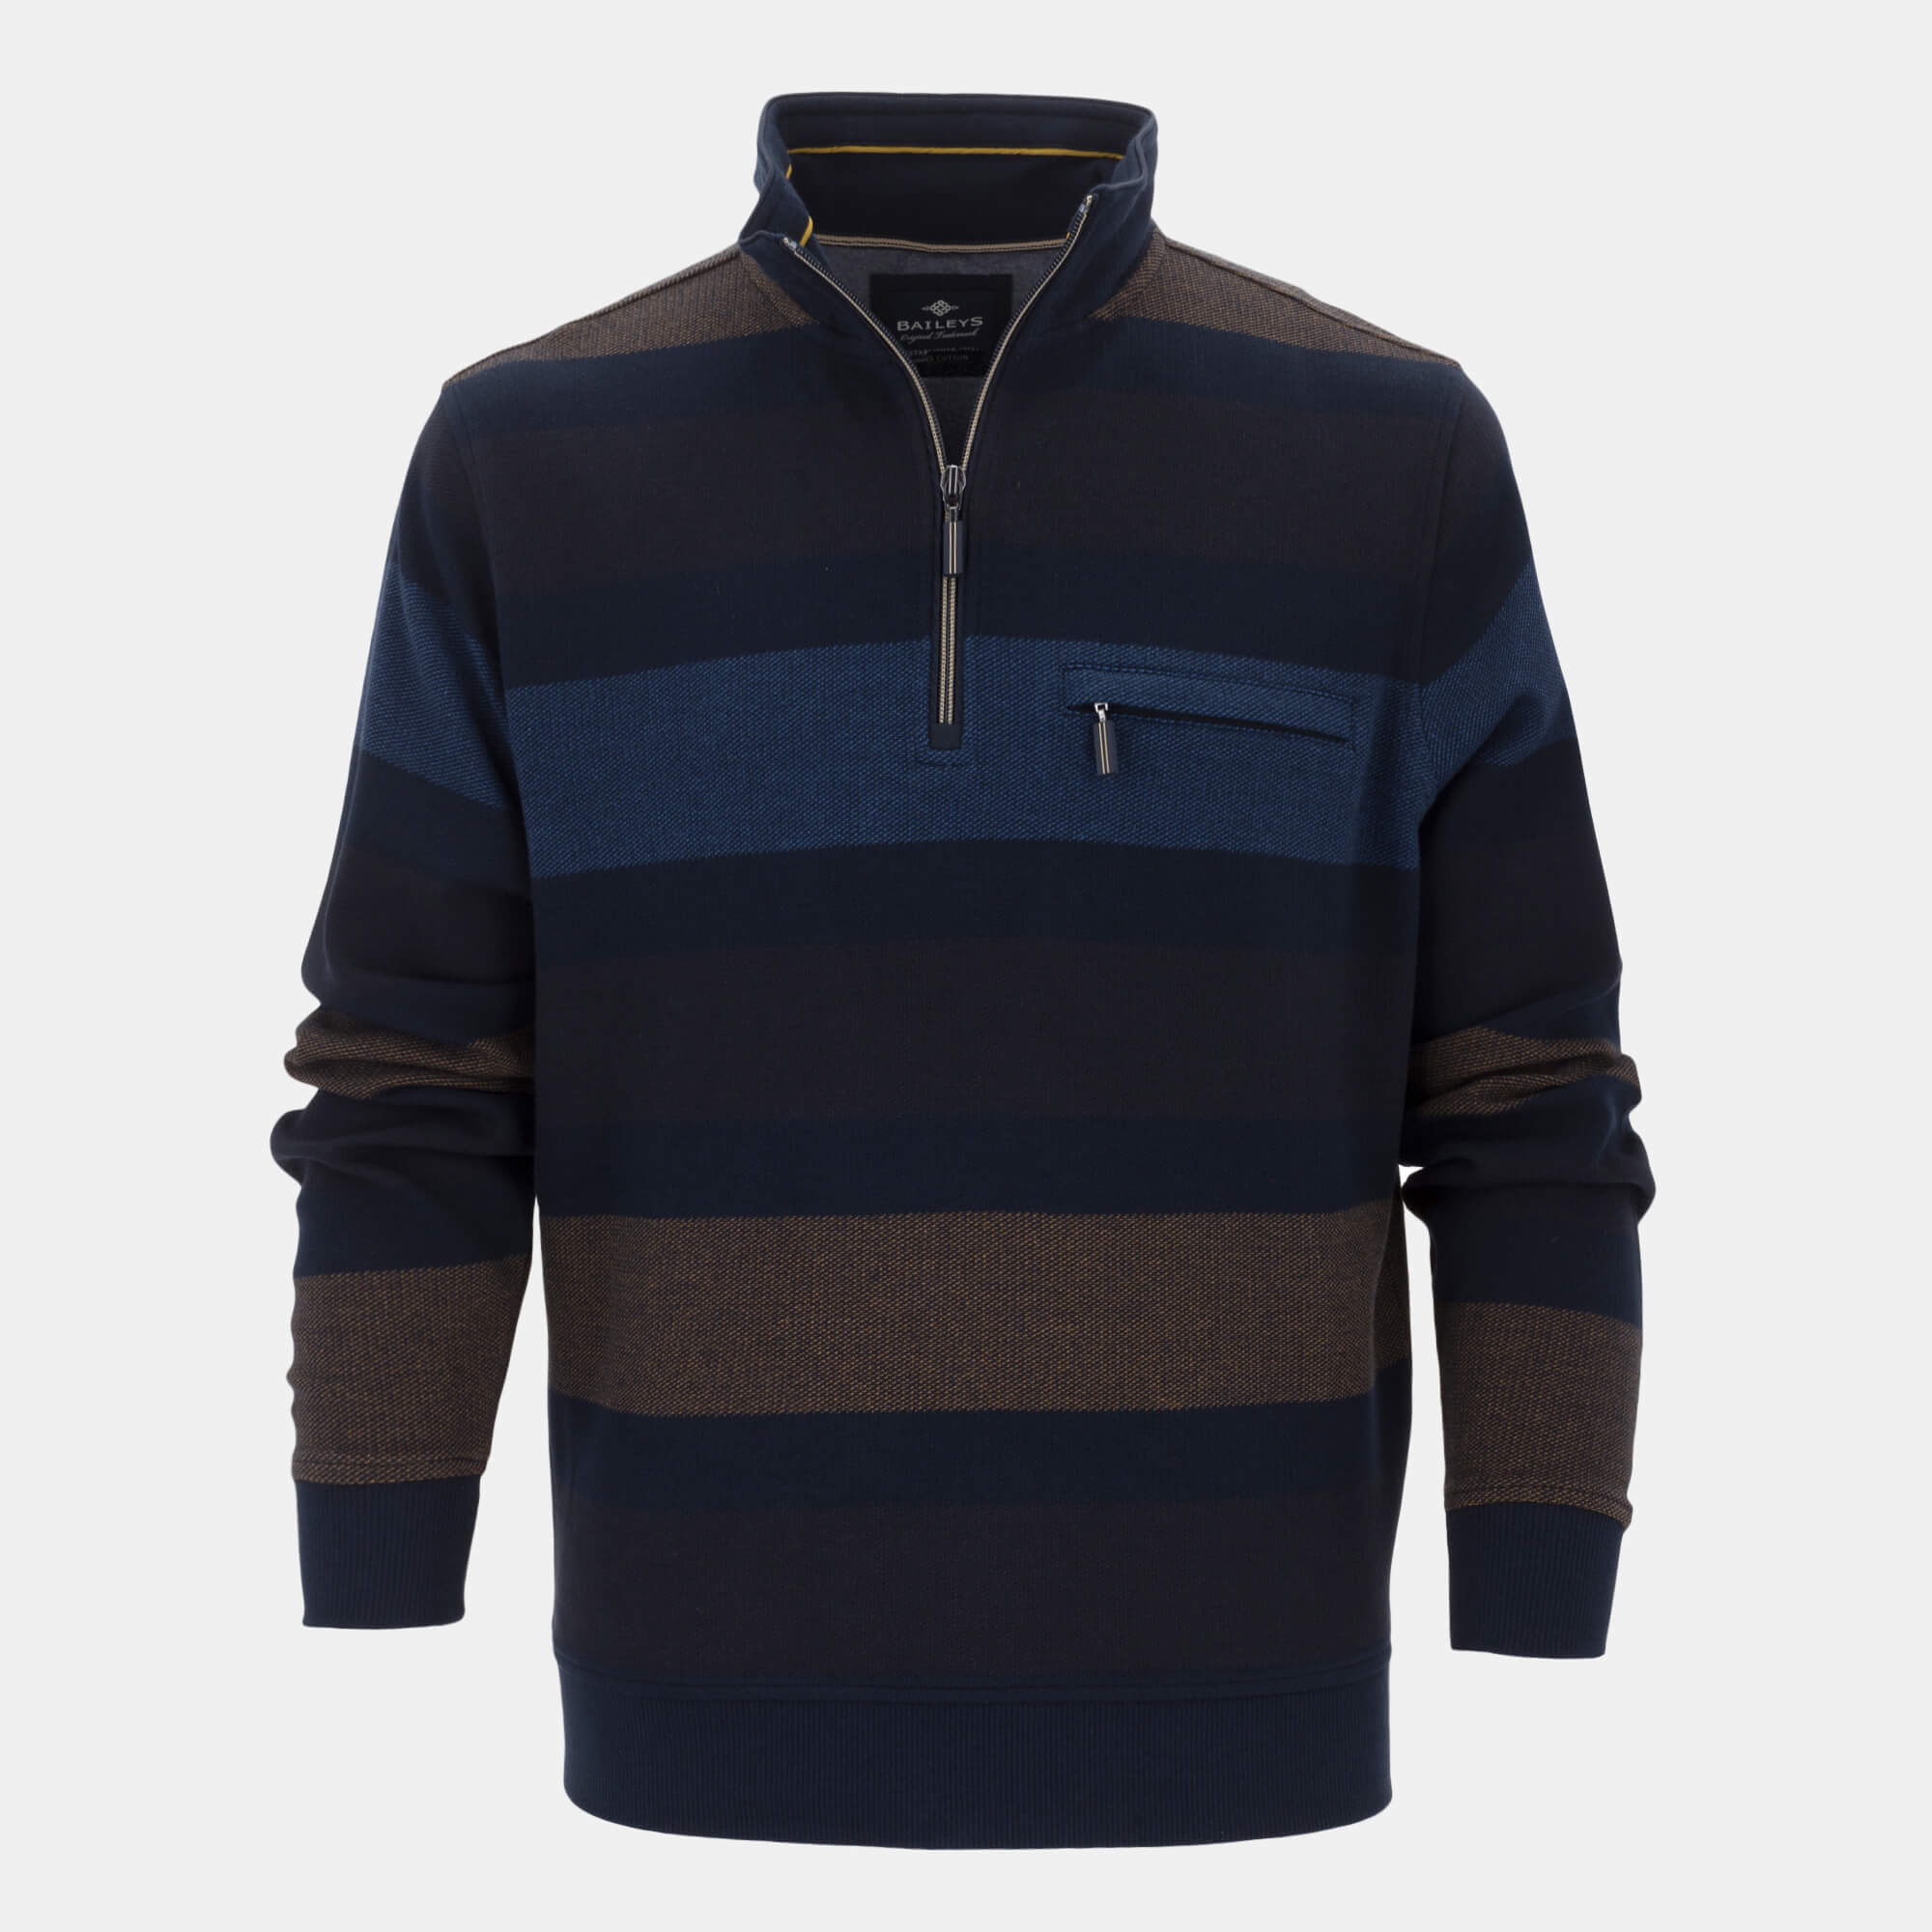 Sweater de rayas 123150